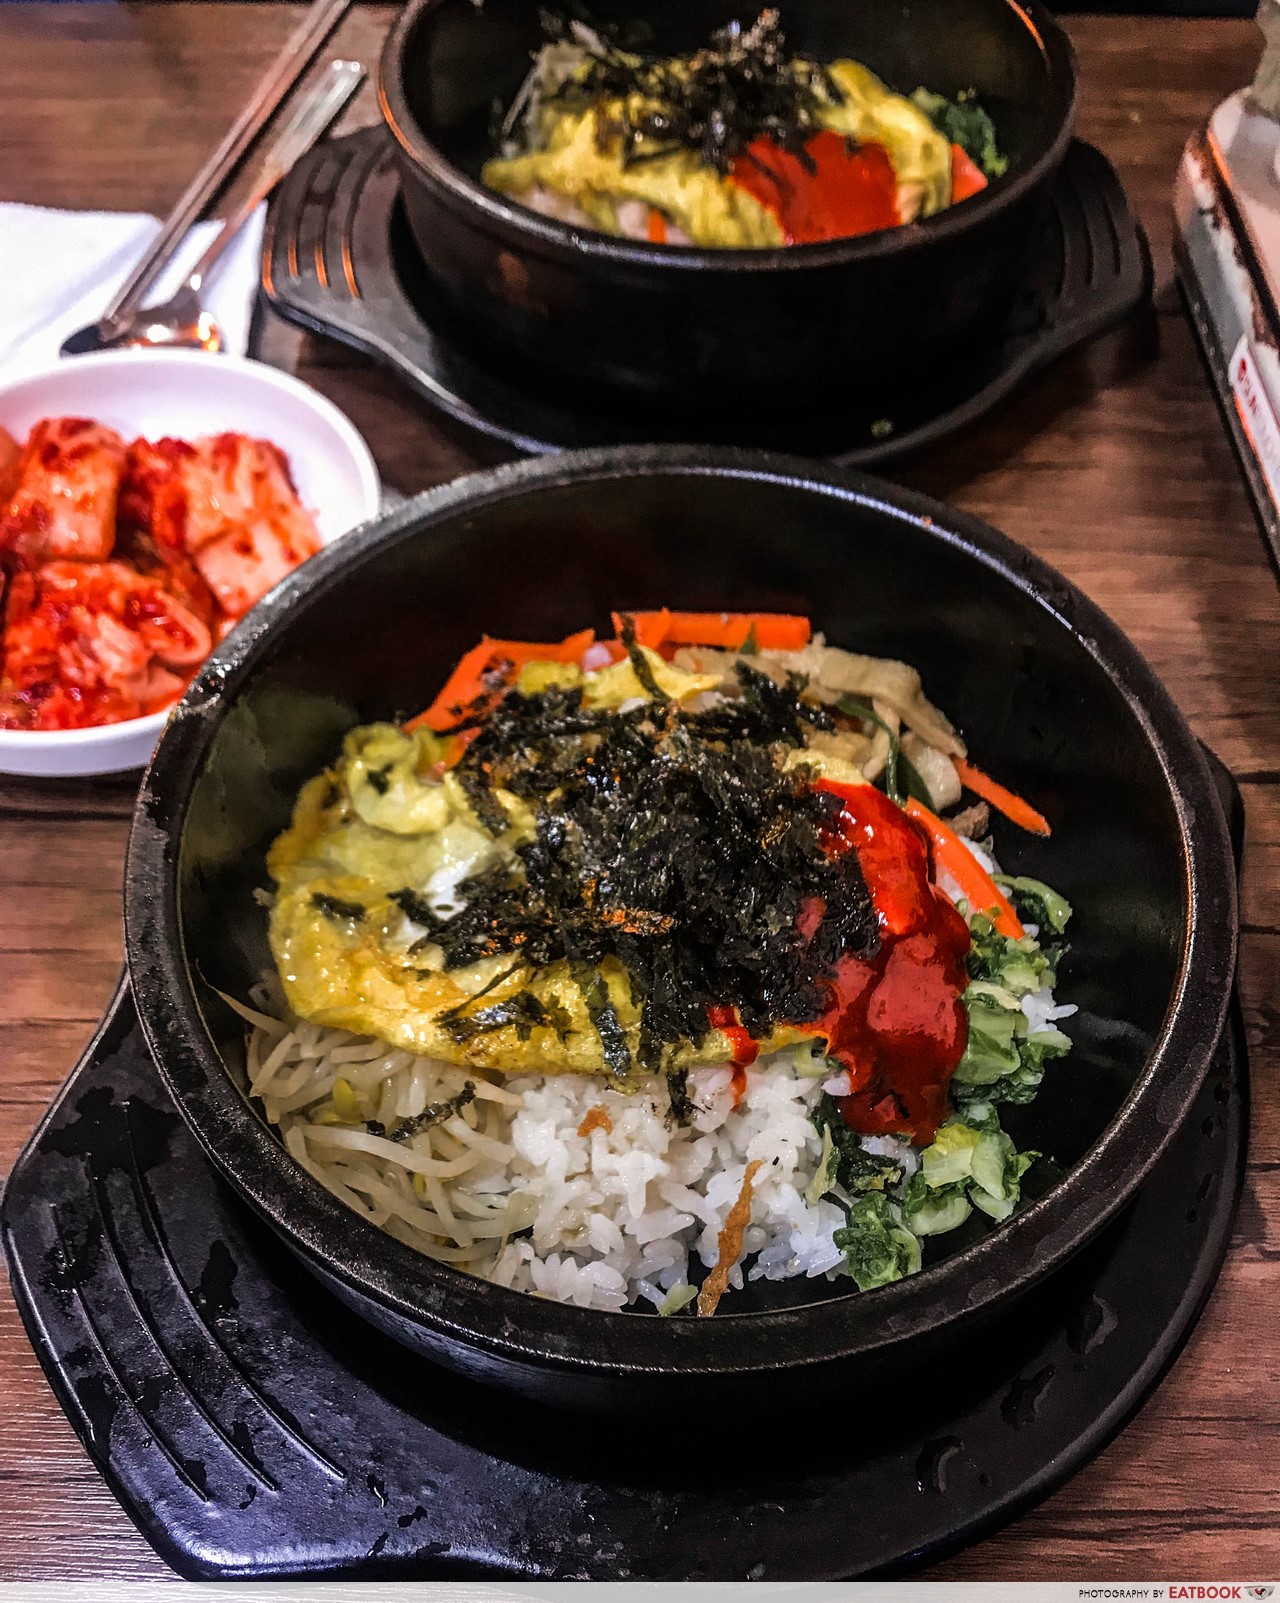 Halal Food places In Seoul - Busan Jib